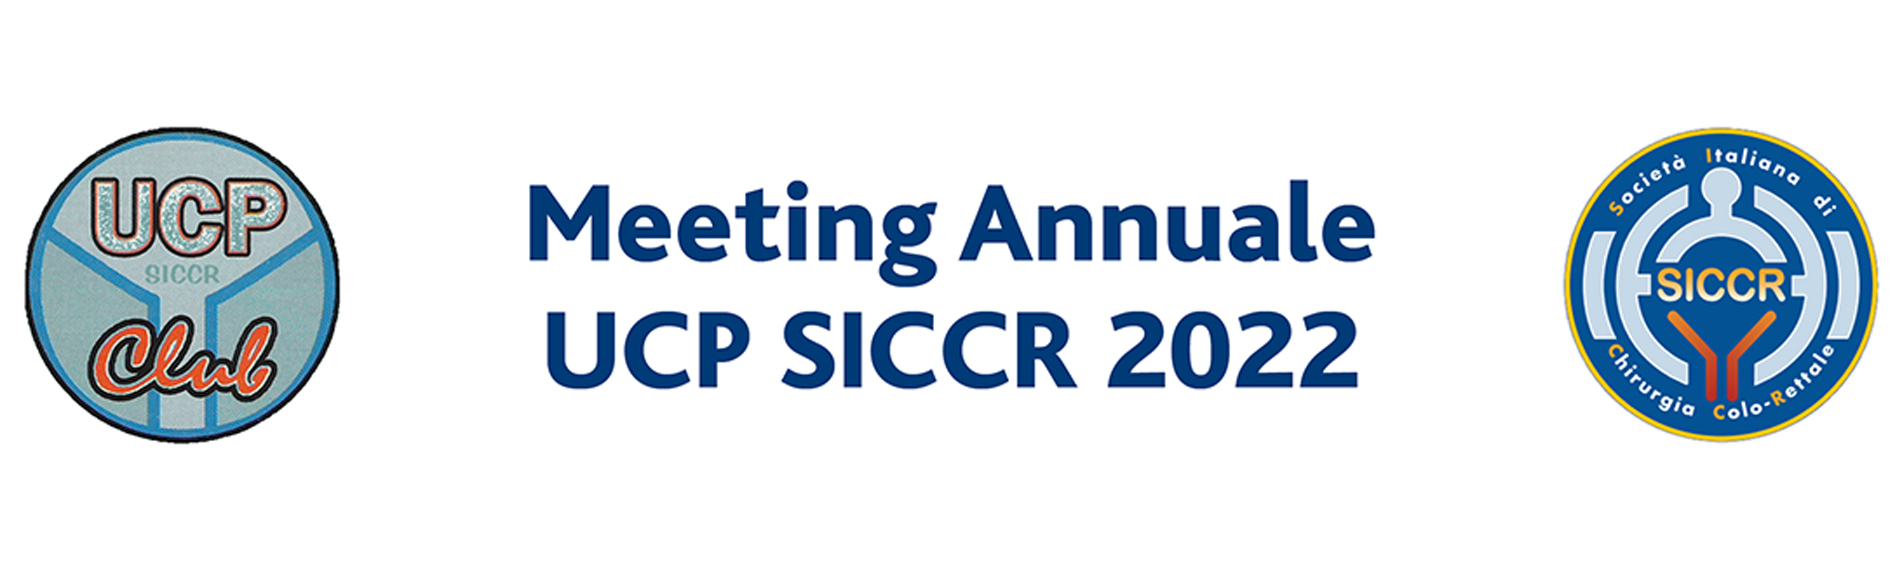 Annual Meeting of the UCP SICCR Coordinators and Regional Representatives, 25 June 2022